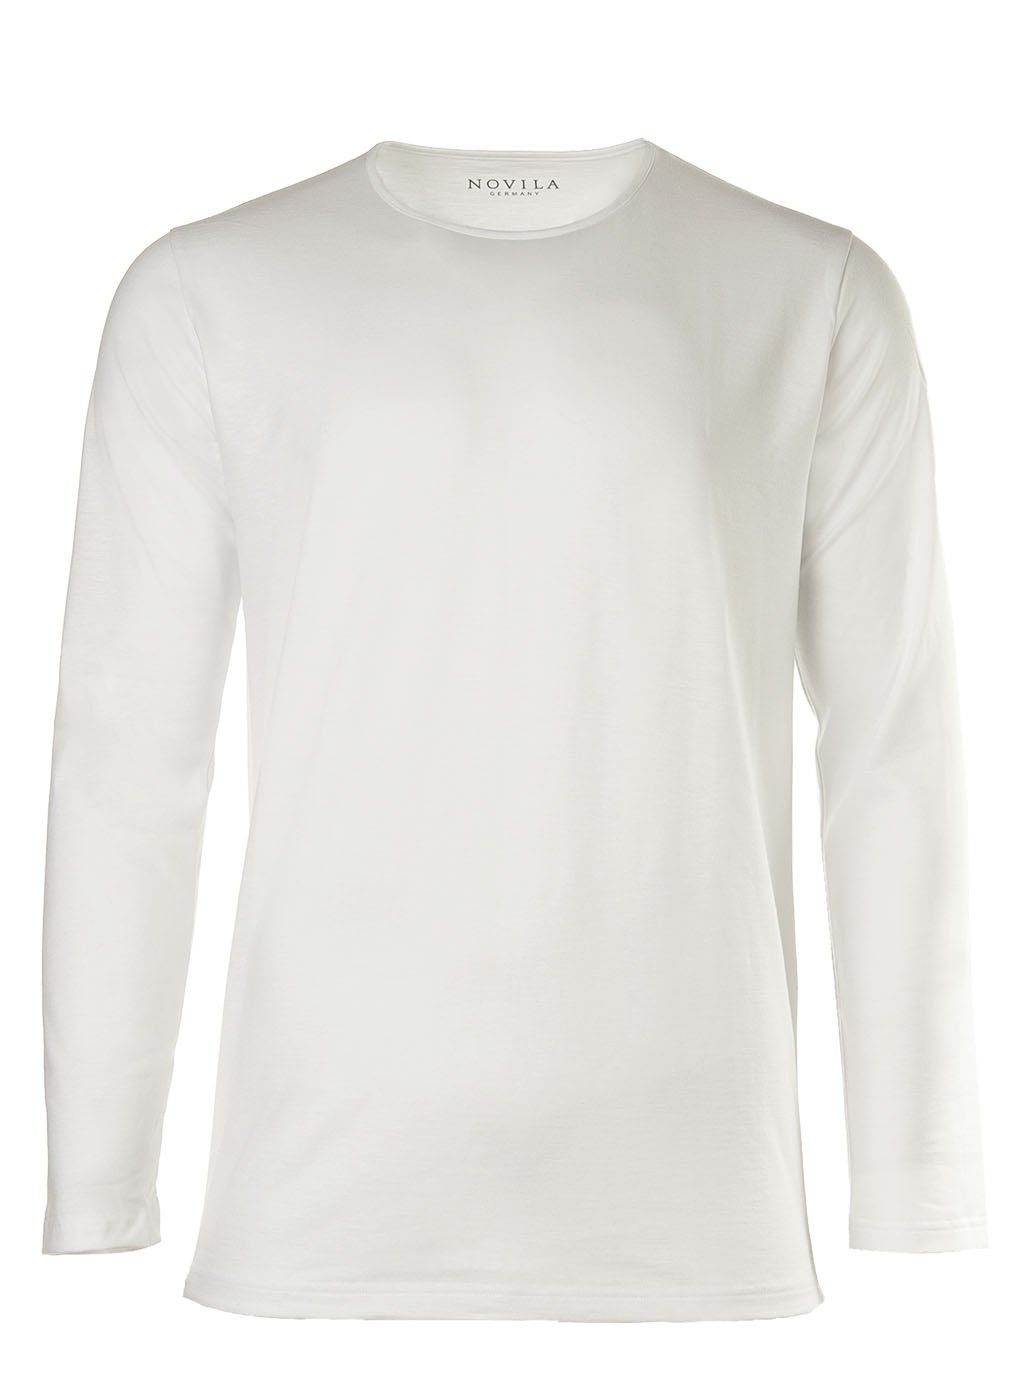 Novila Sweatshirt Herren Shirt, langarm - Loungewear, Rundhals, 1/1 Weiß